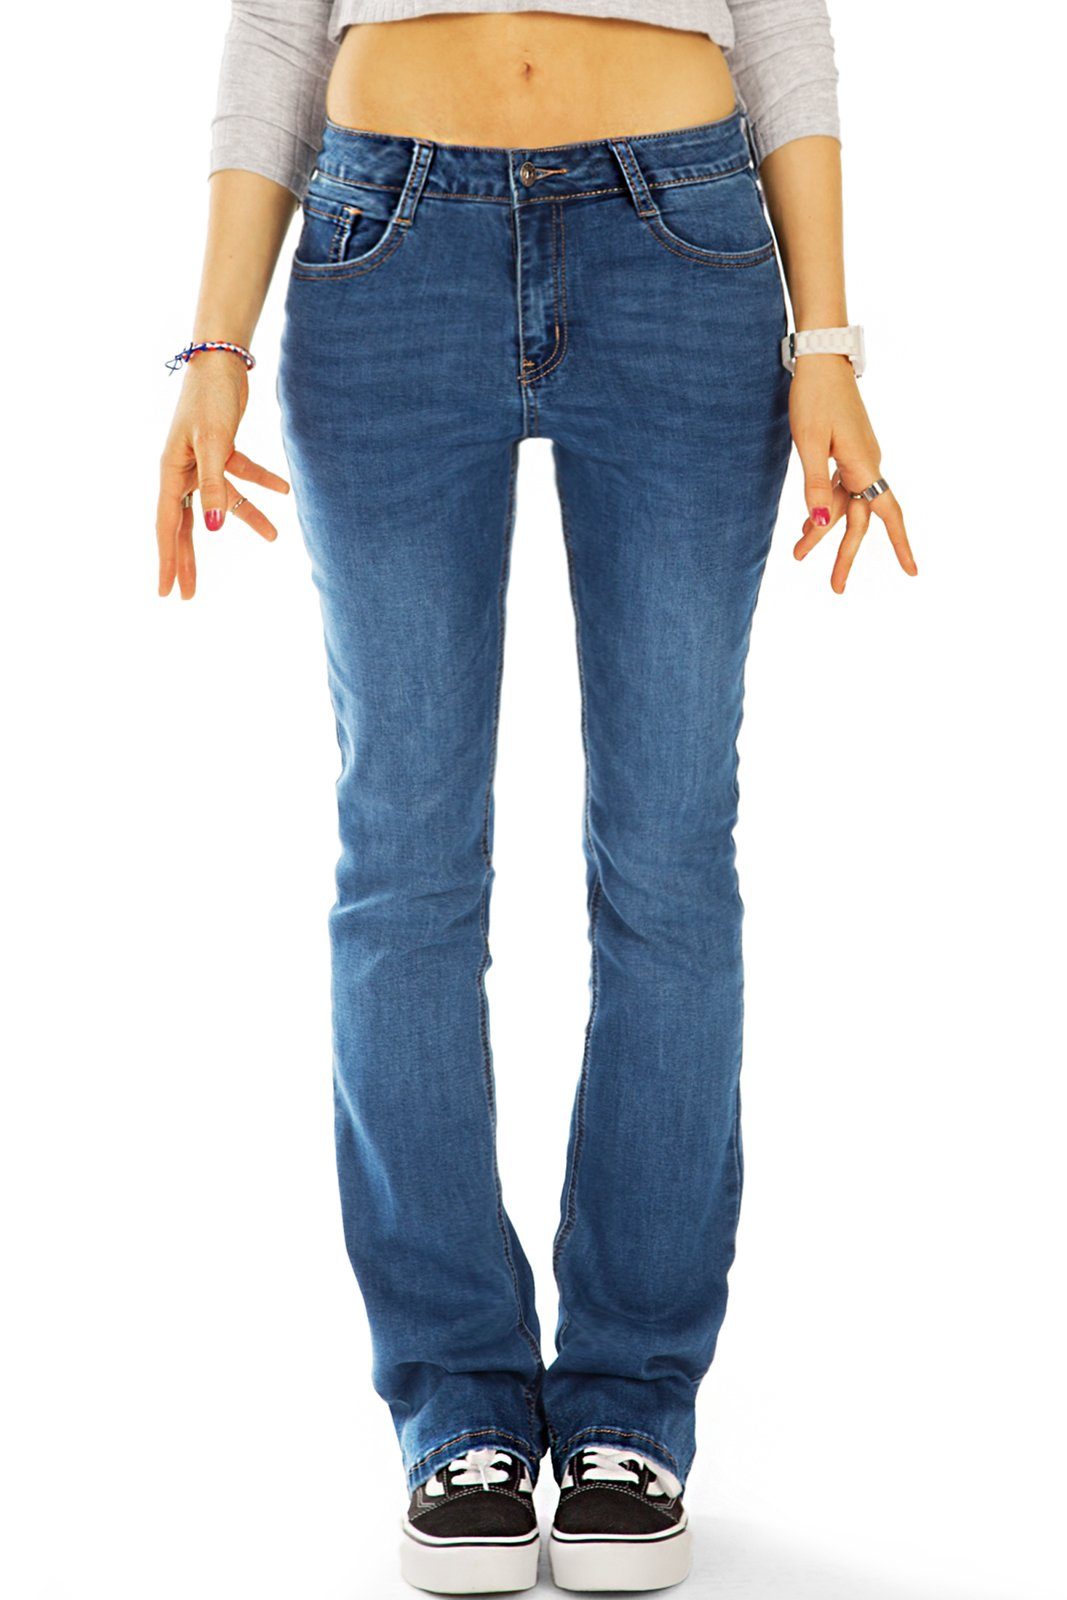 be Damen Stretch-Anteil mit waist 5-Pocket-Style, Bootcut-Jeans bootcut Schlaghose regular - Hosen, styled Medium Jeans j47L -